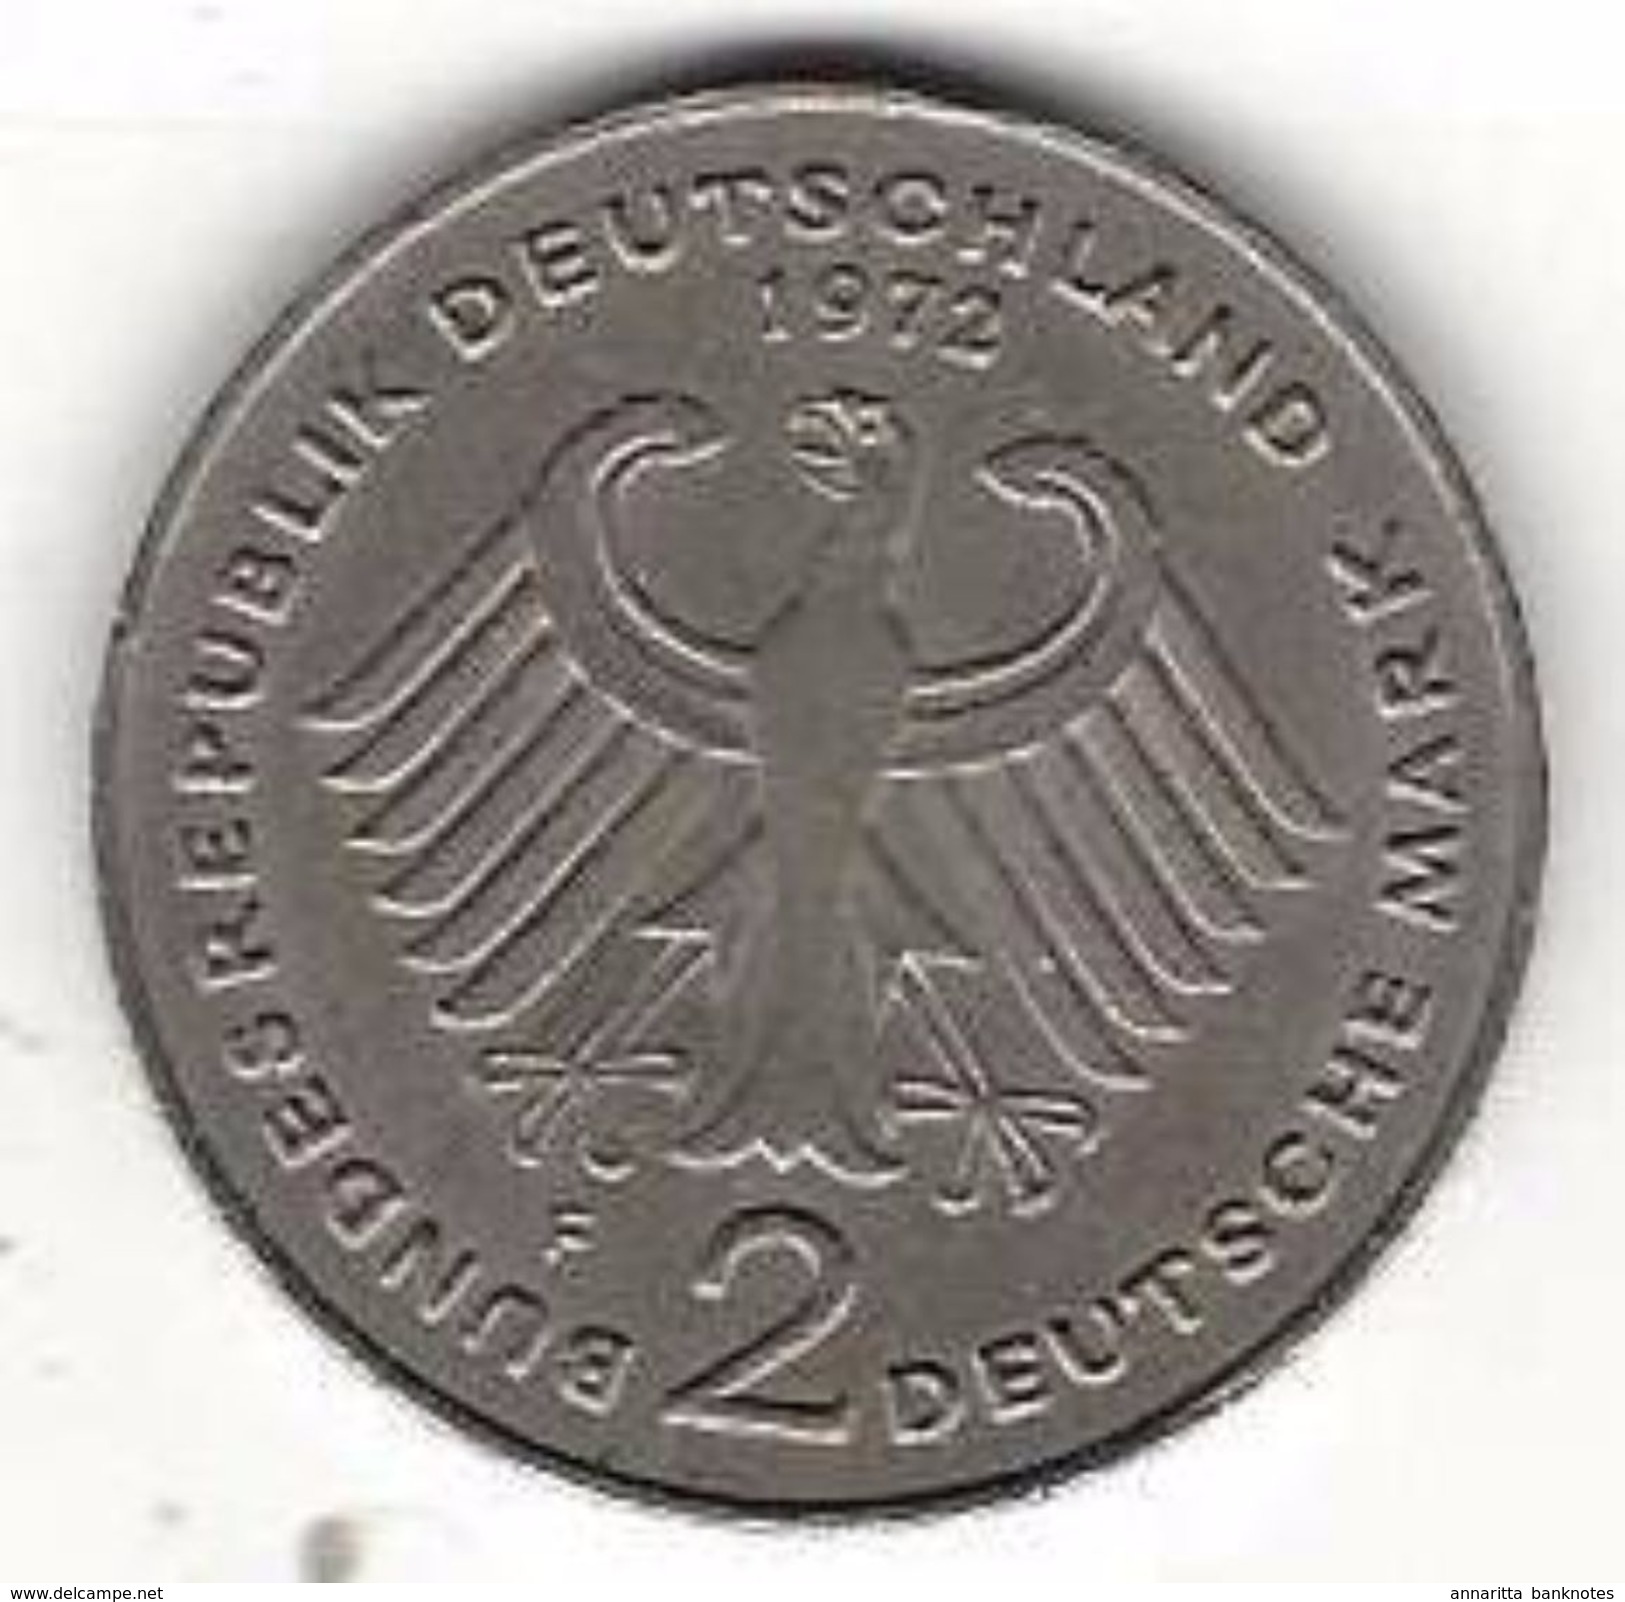 GERMANY 2 MARK 1972 KM# 124 XF  [DE-0124-1972] - 2 Mark